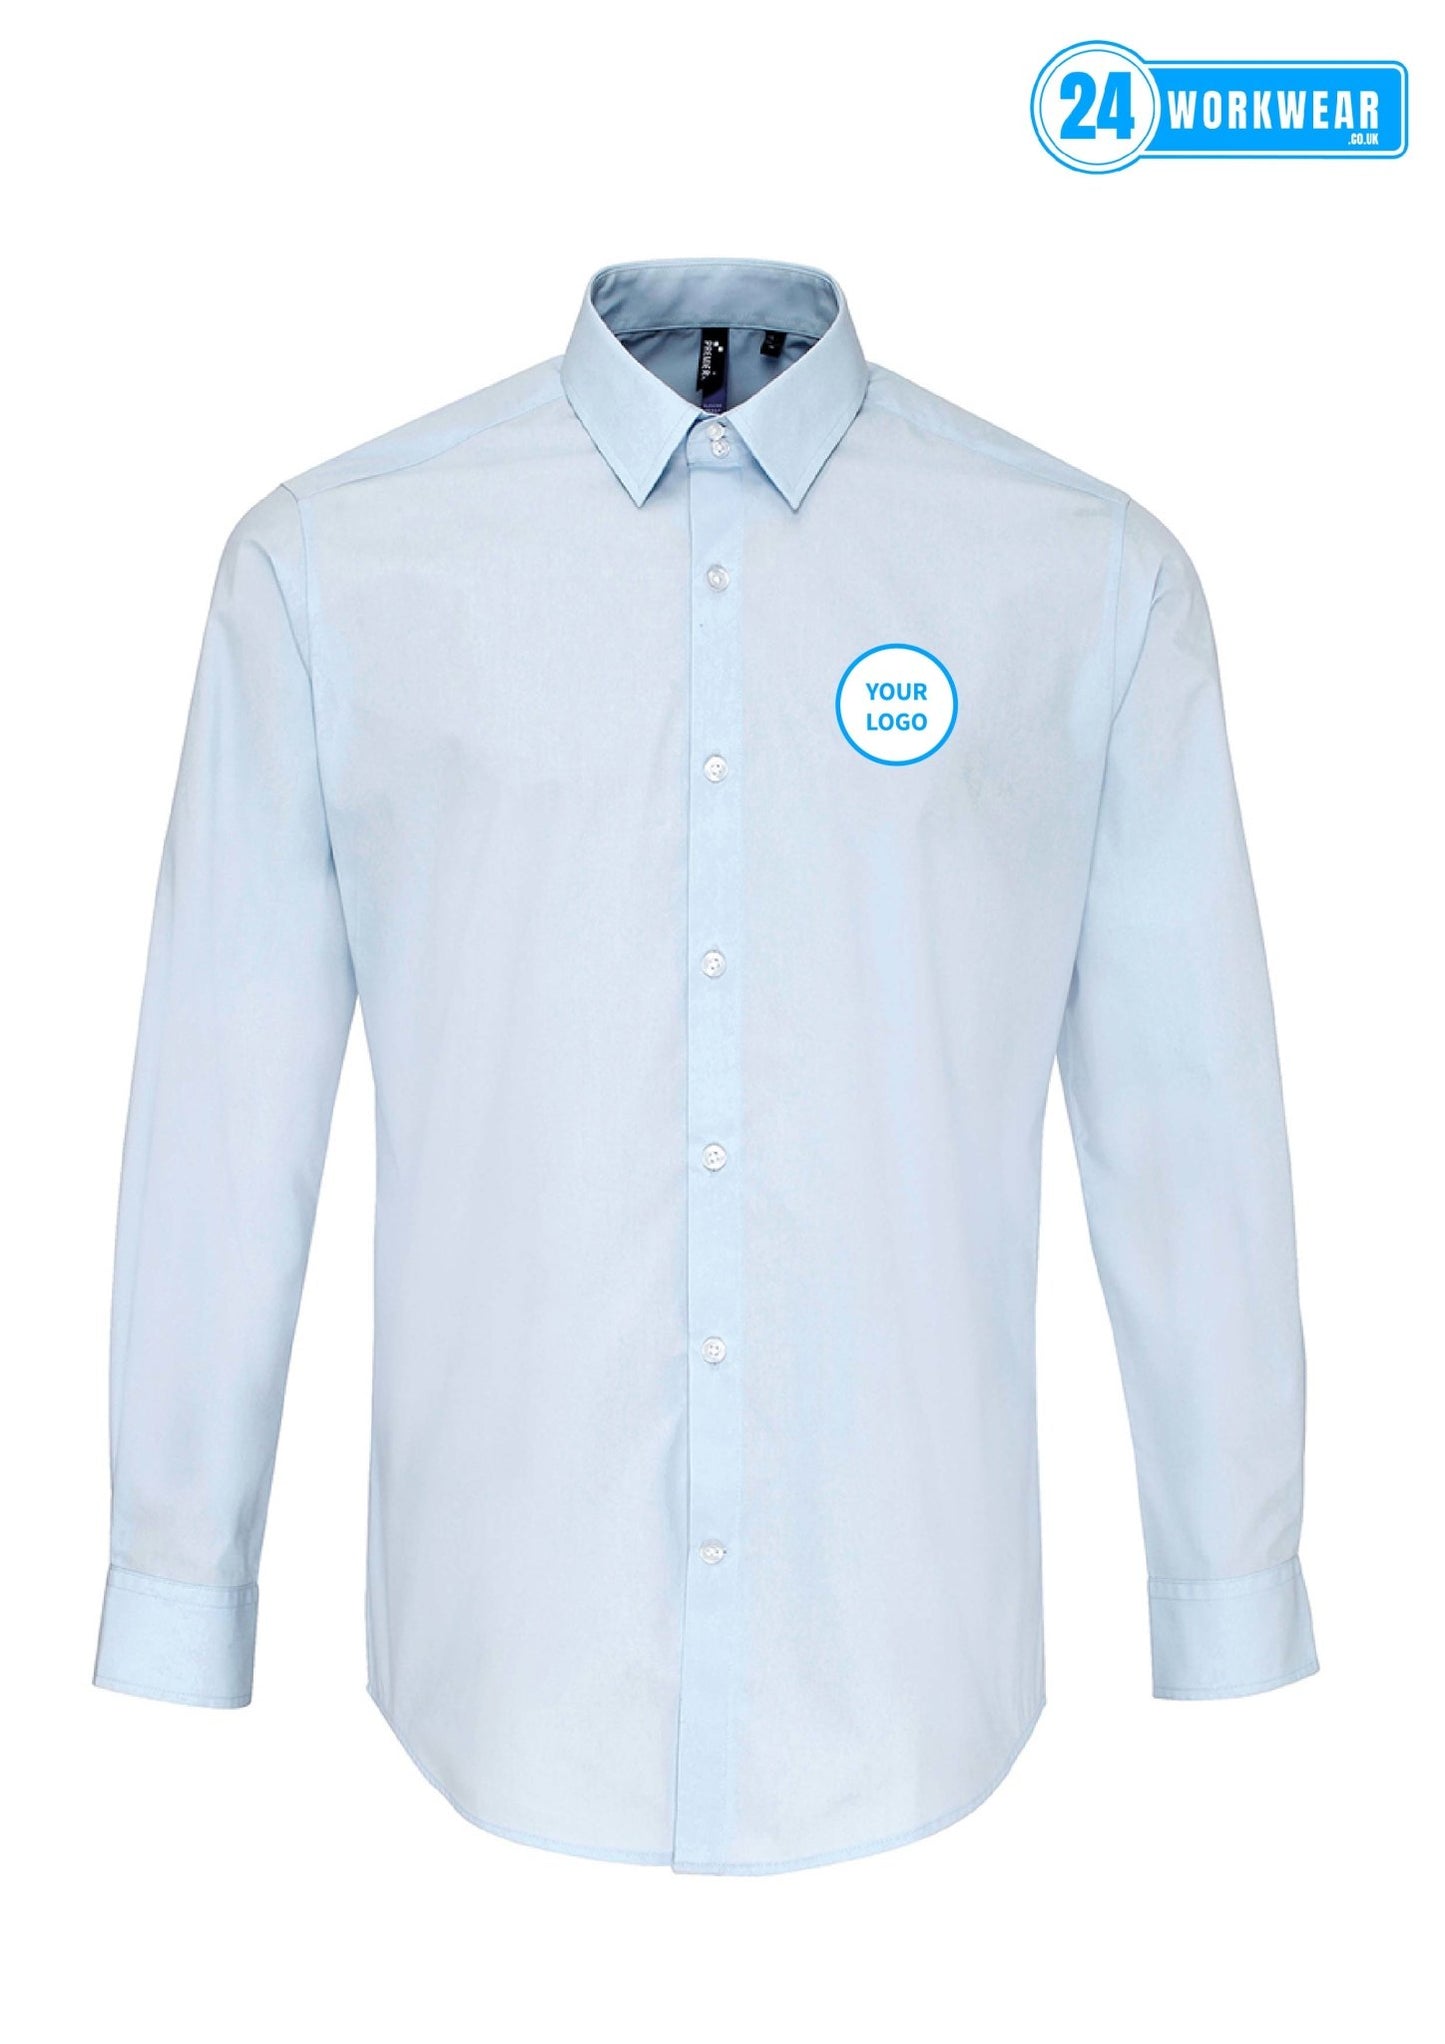 Premier Supreme Long Sleeve Poplin Shirt - 24 Workwear - Shirt